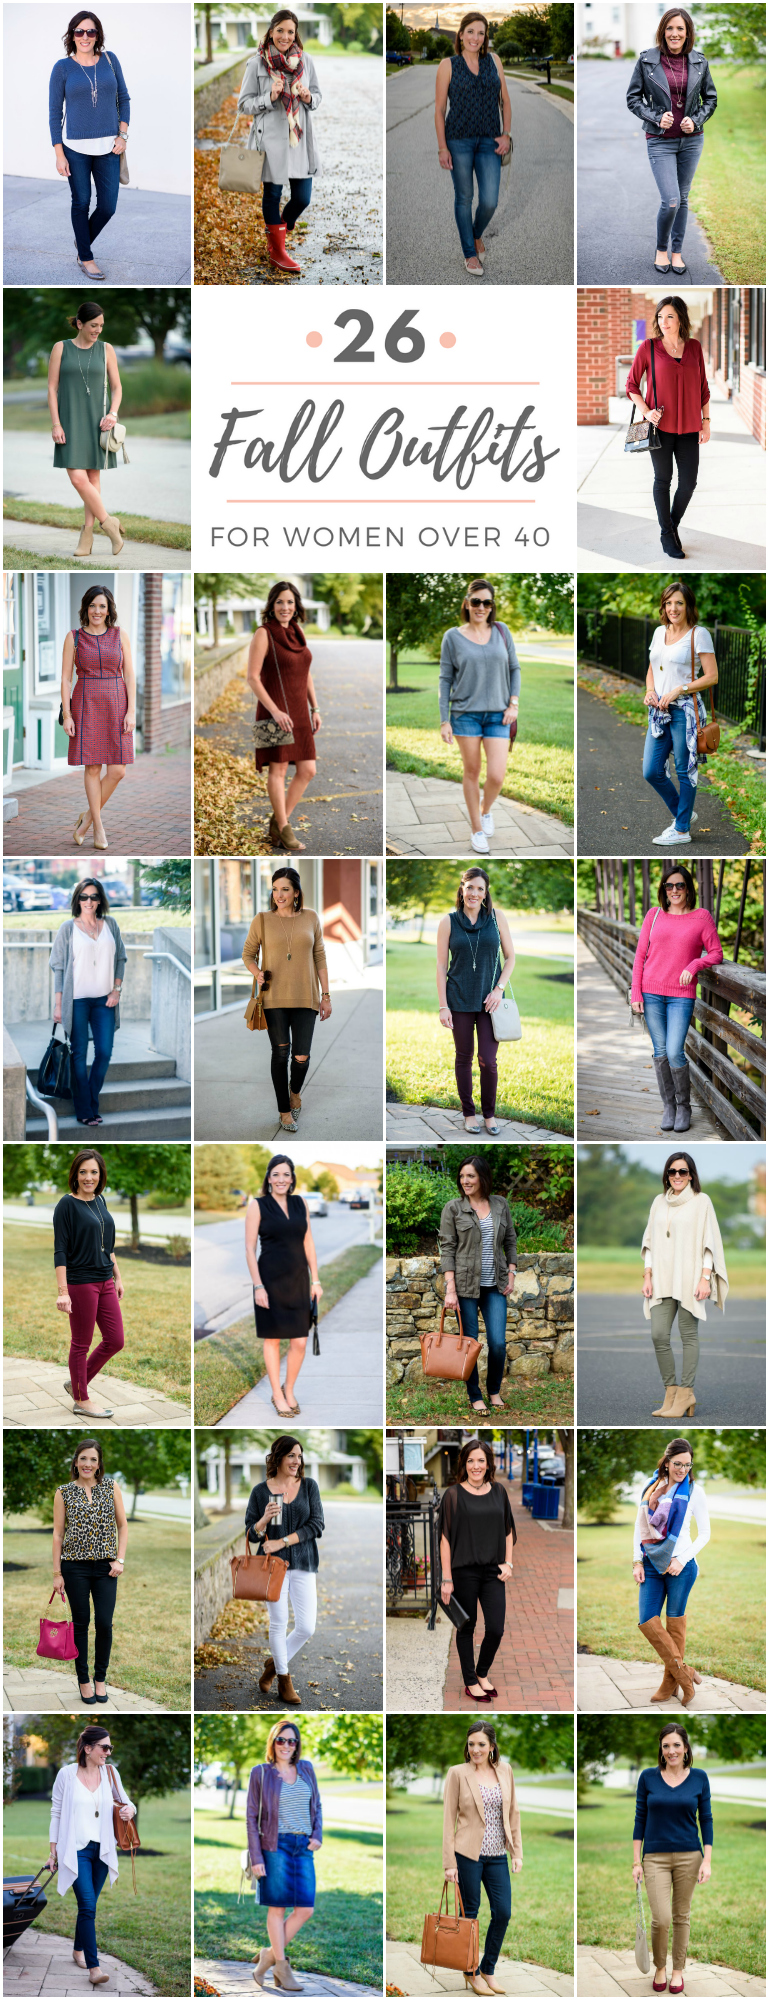 https://jolynneshane.com/wp-content/uploads/2016/09/26-fall-outfits-for-women-over-40.jpg